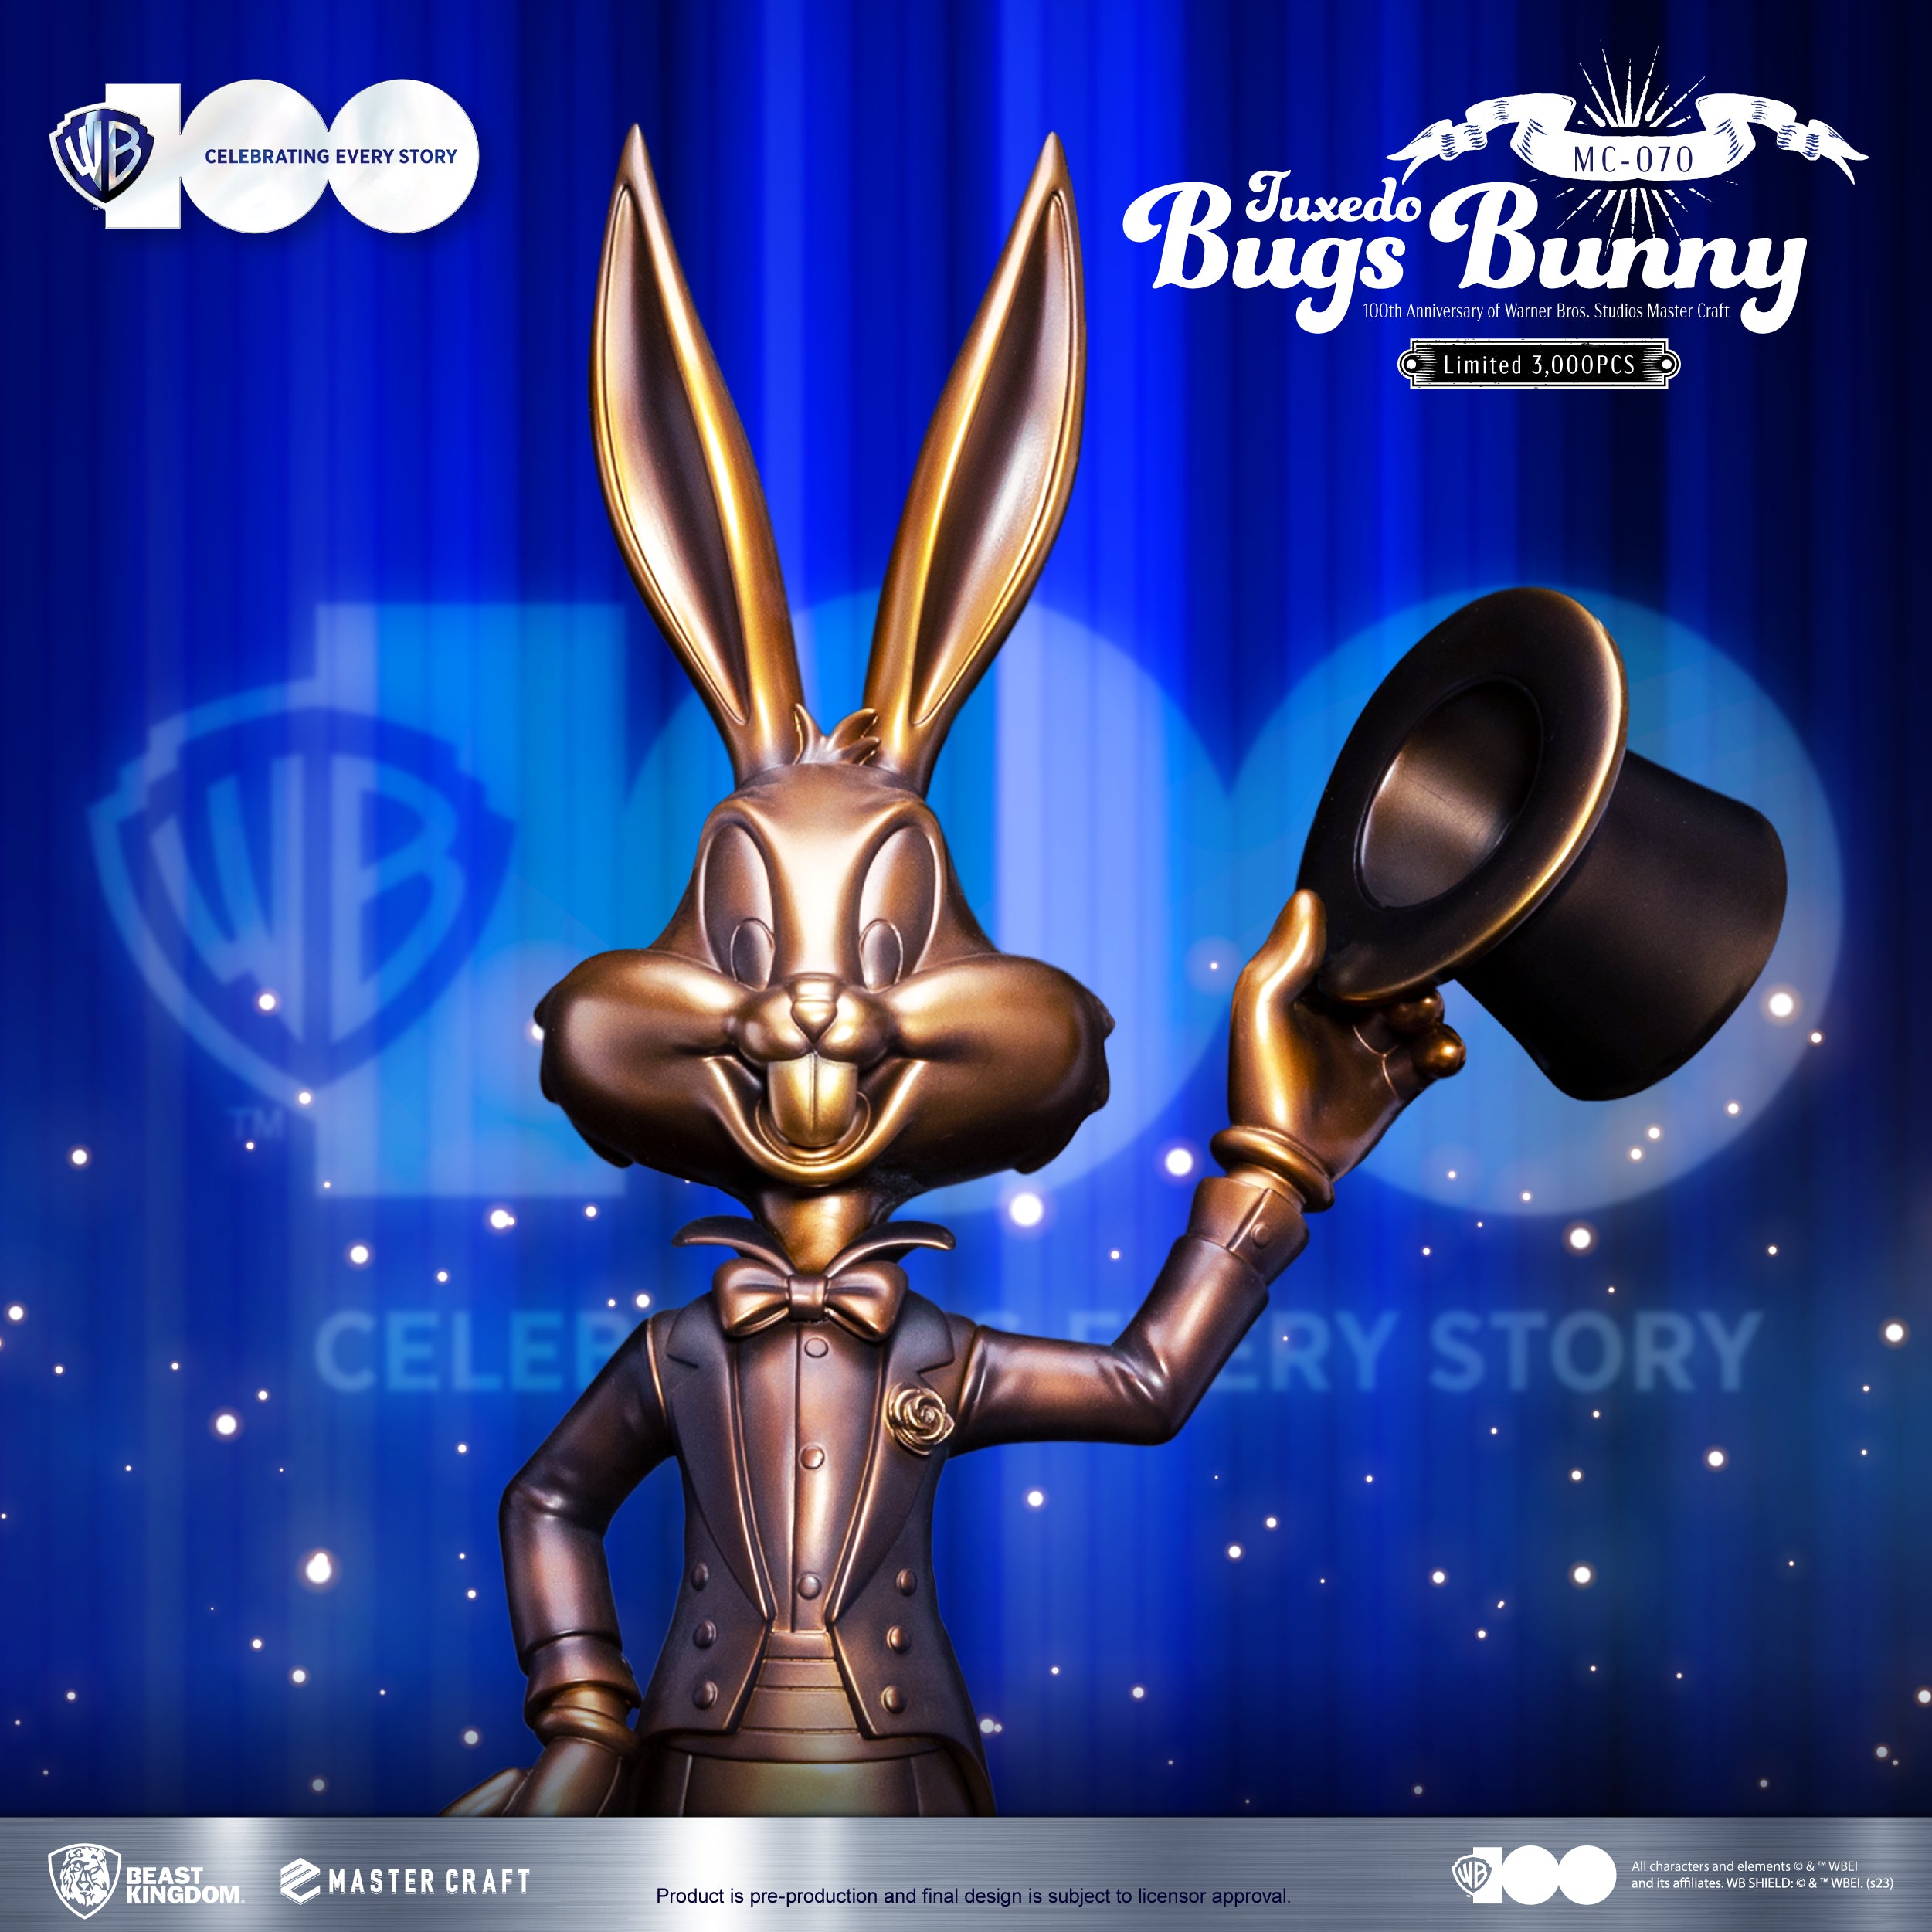 Beast Kingdom MC-070 100th Anniversary of Warner Bros. Studios Tuxedo Bugs Bunny 1:4 Scale Master Craft Figure Statue